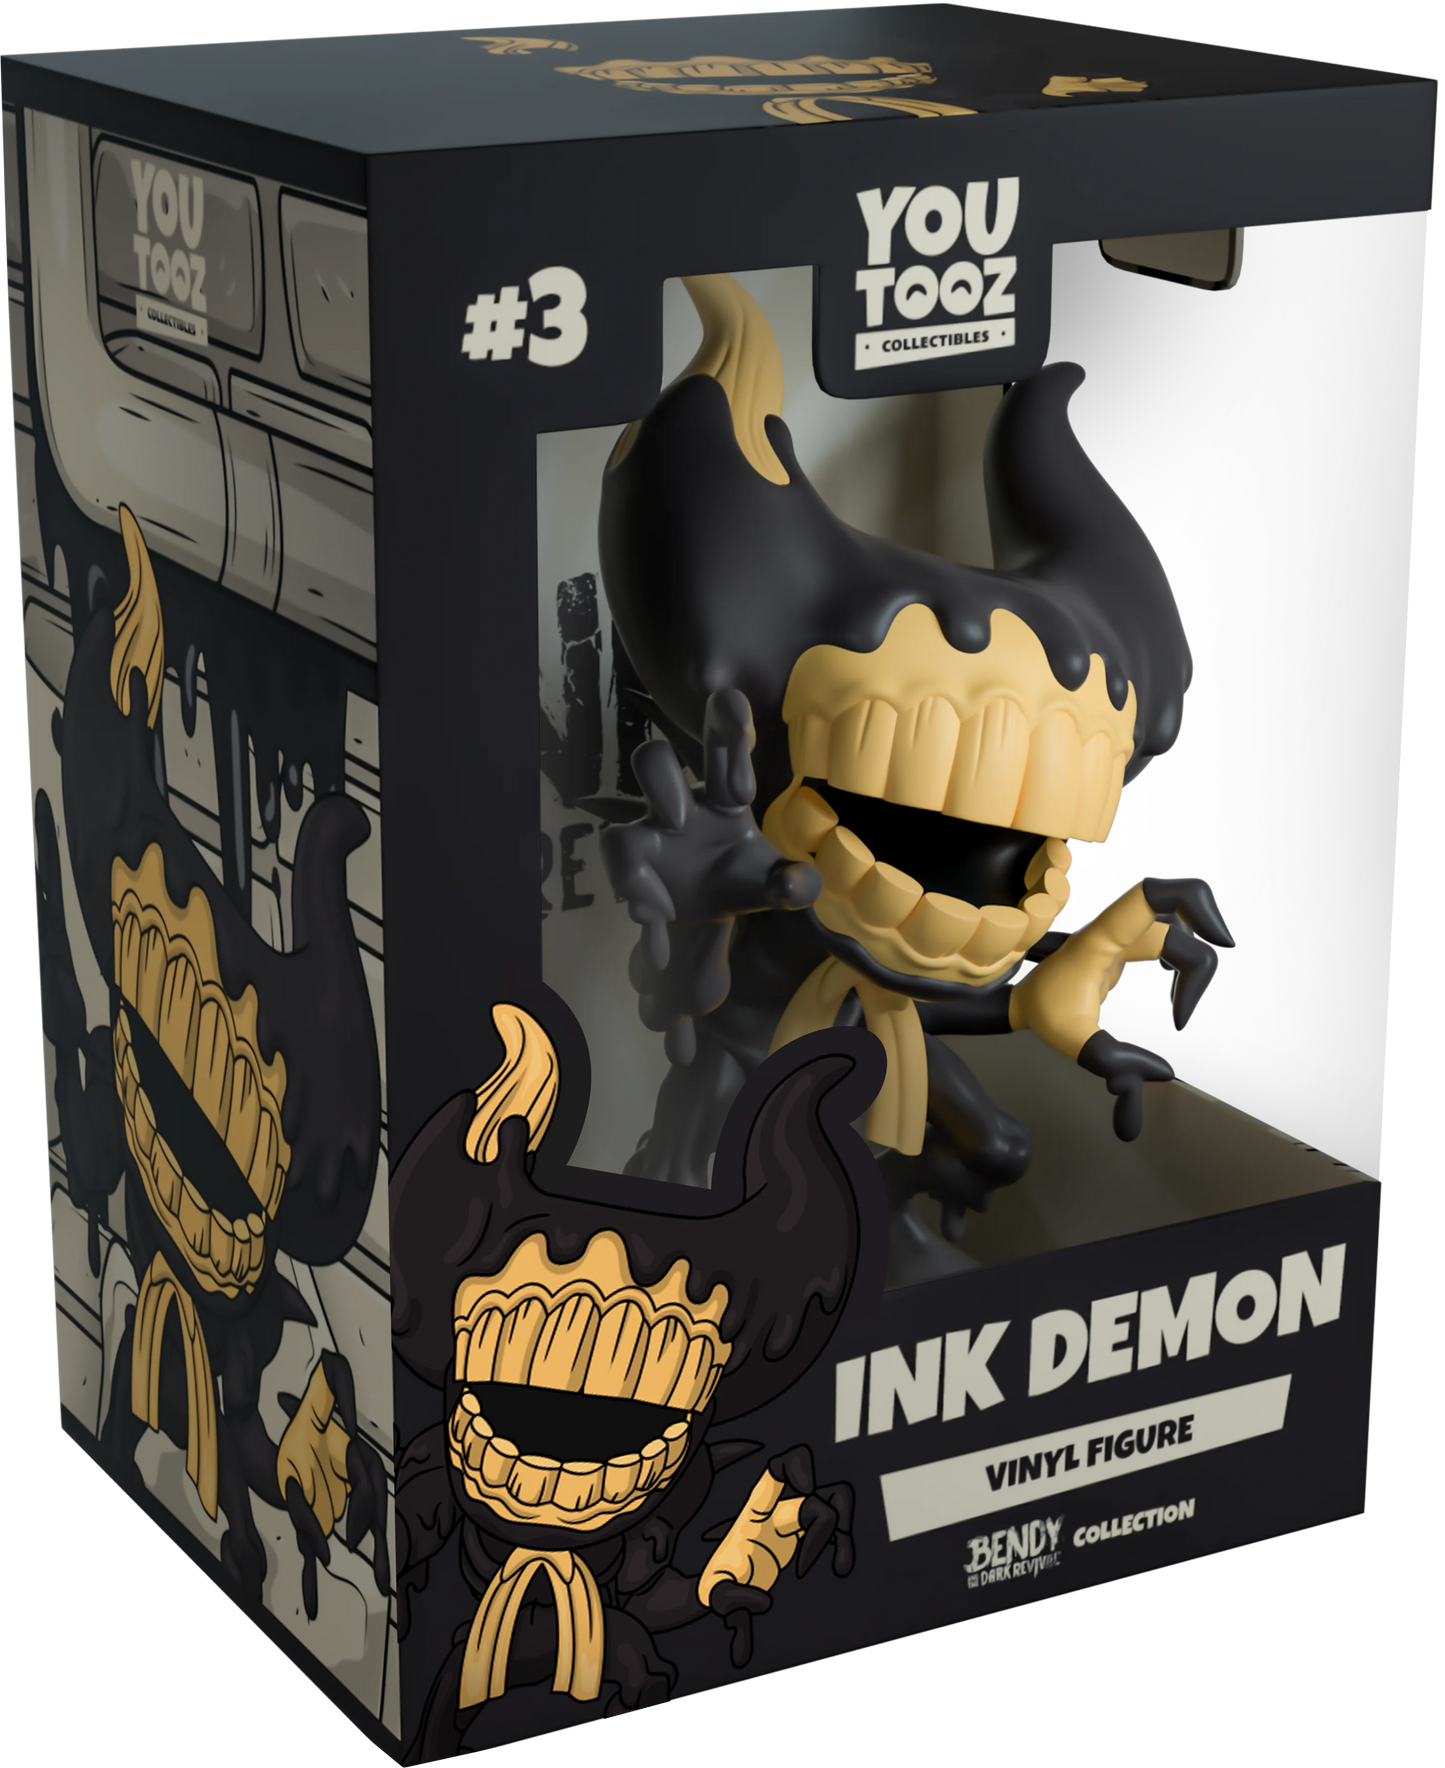 Ink Demon Bendy and the Dark Revival Vinyl figurine Youtooz